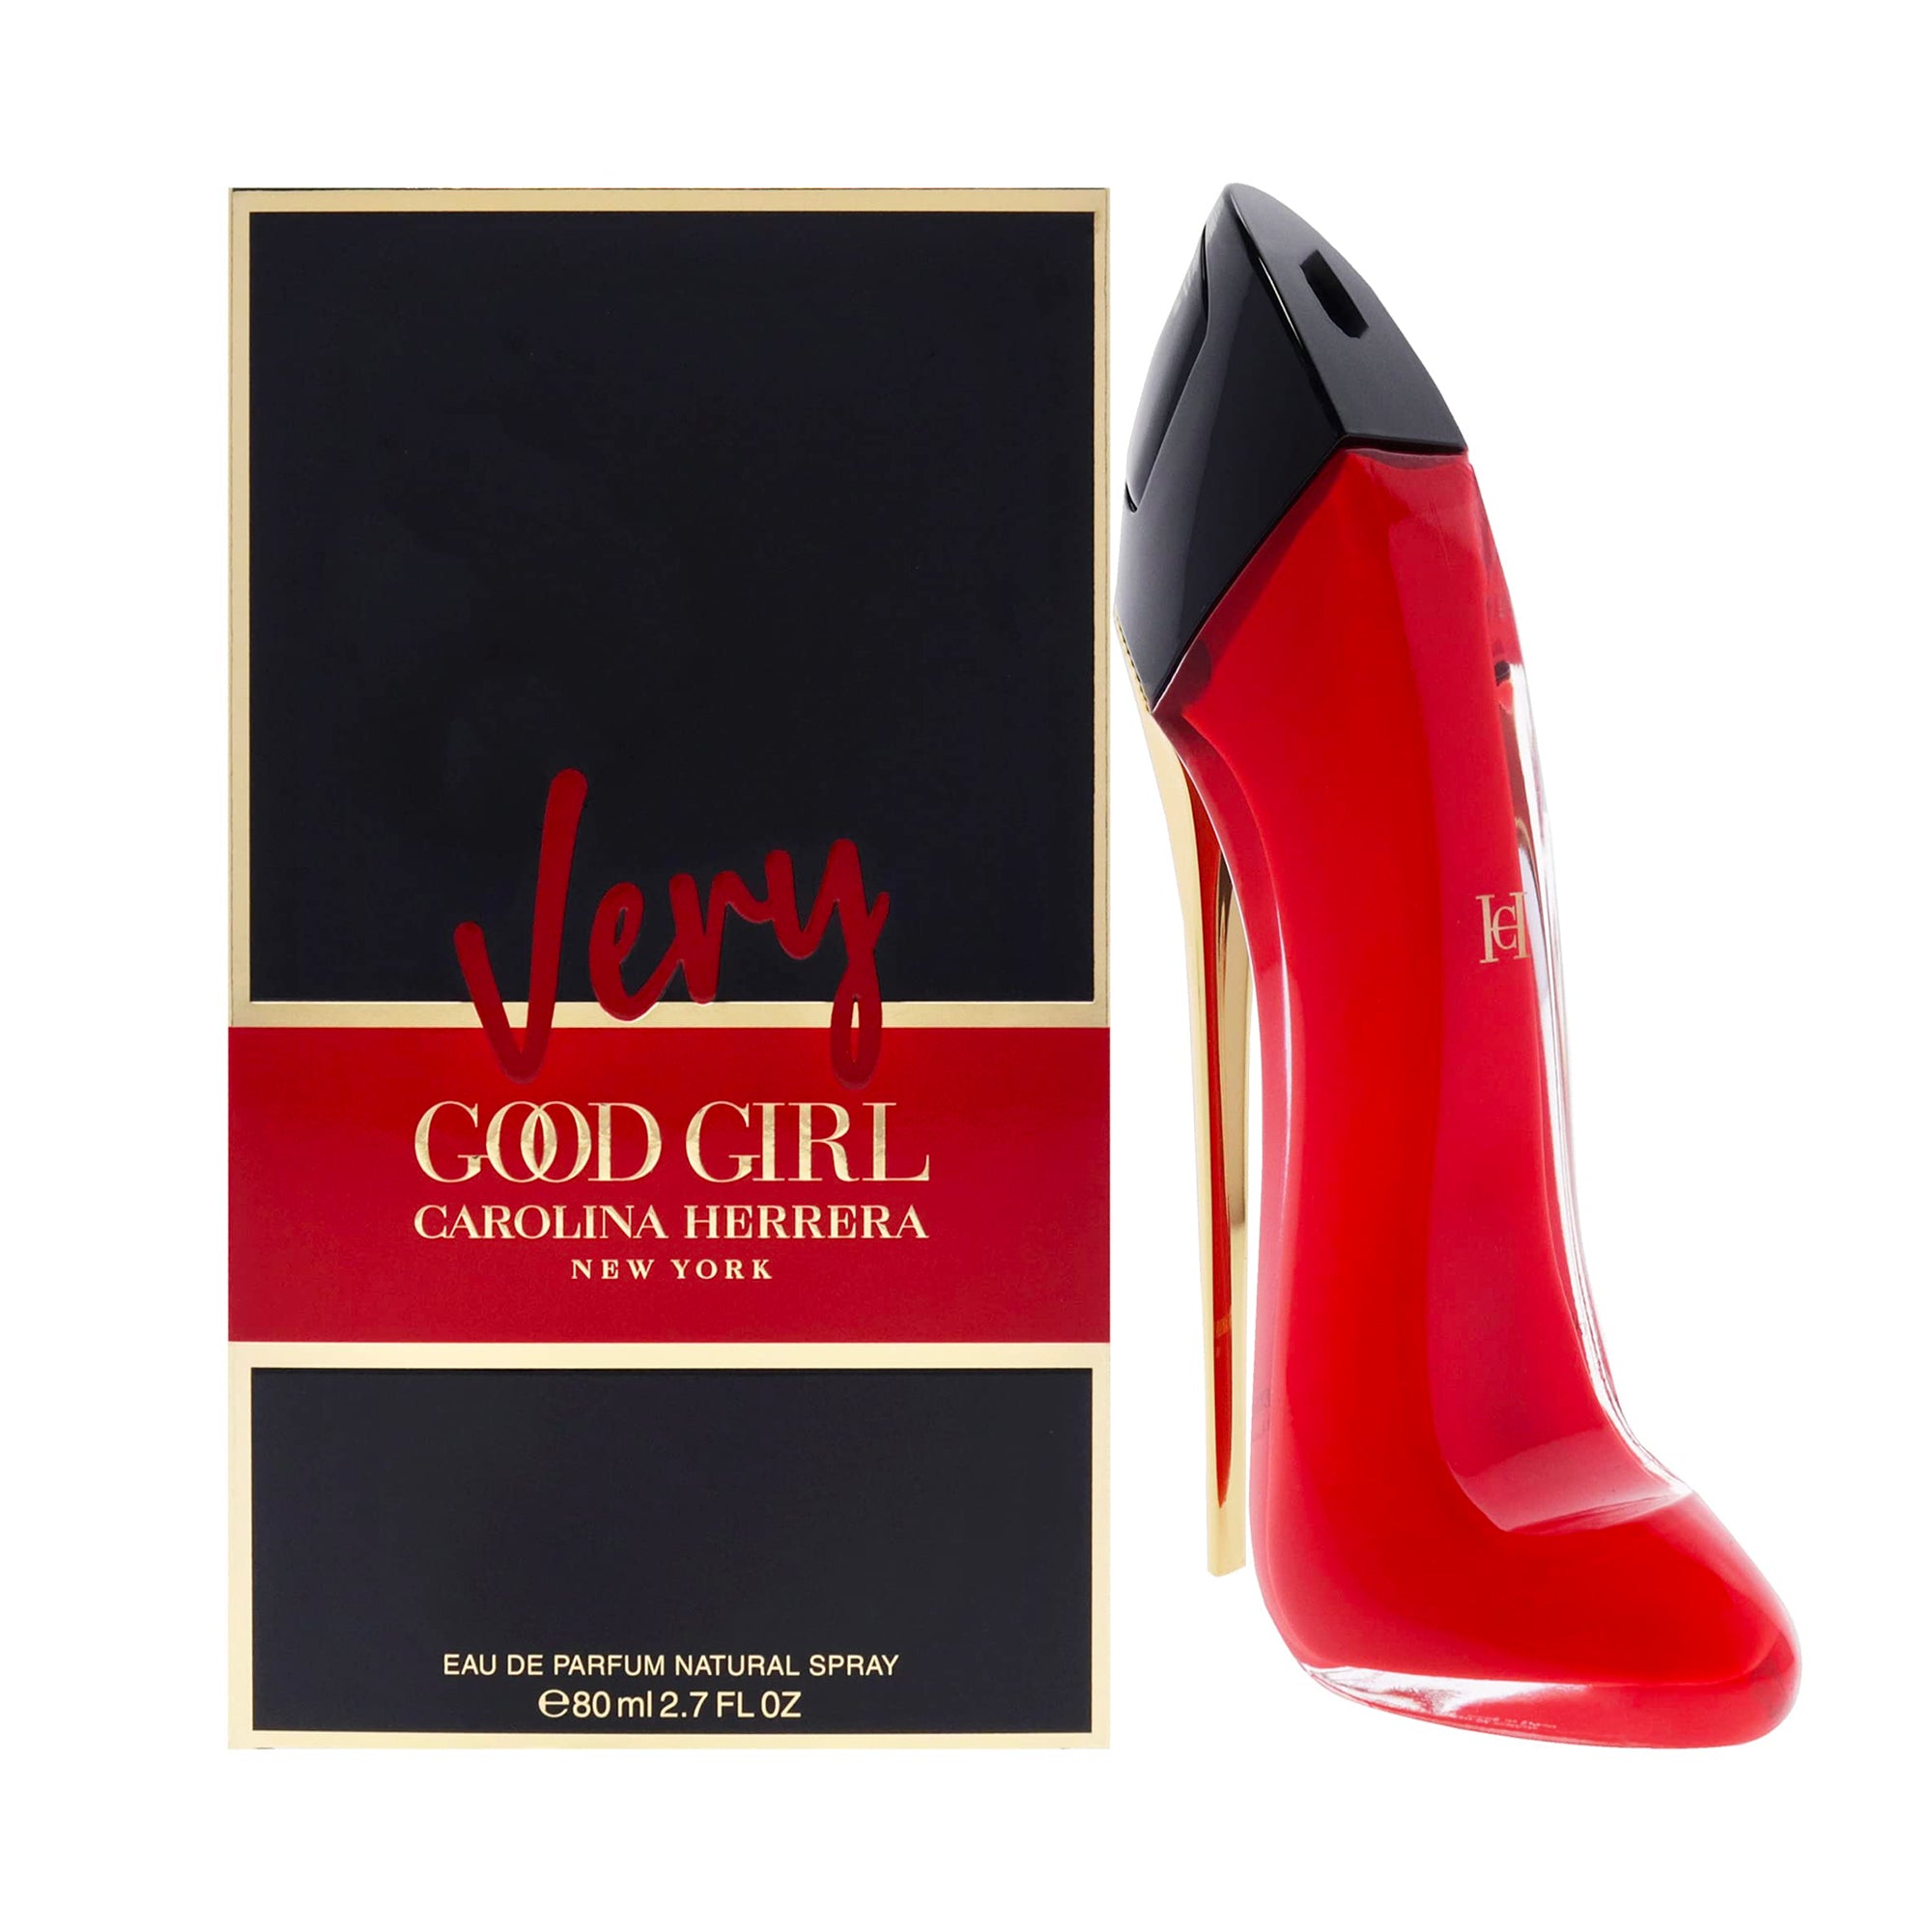 Good Girl by Carolina Herrera 2.7 oz Eau de Parfum Spray (Tester) for Women.